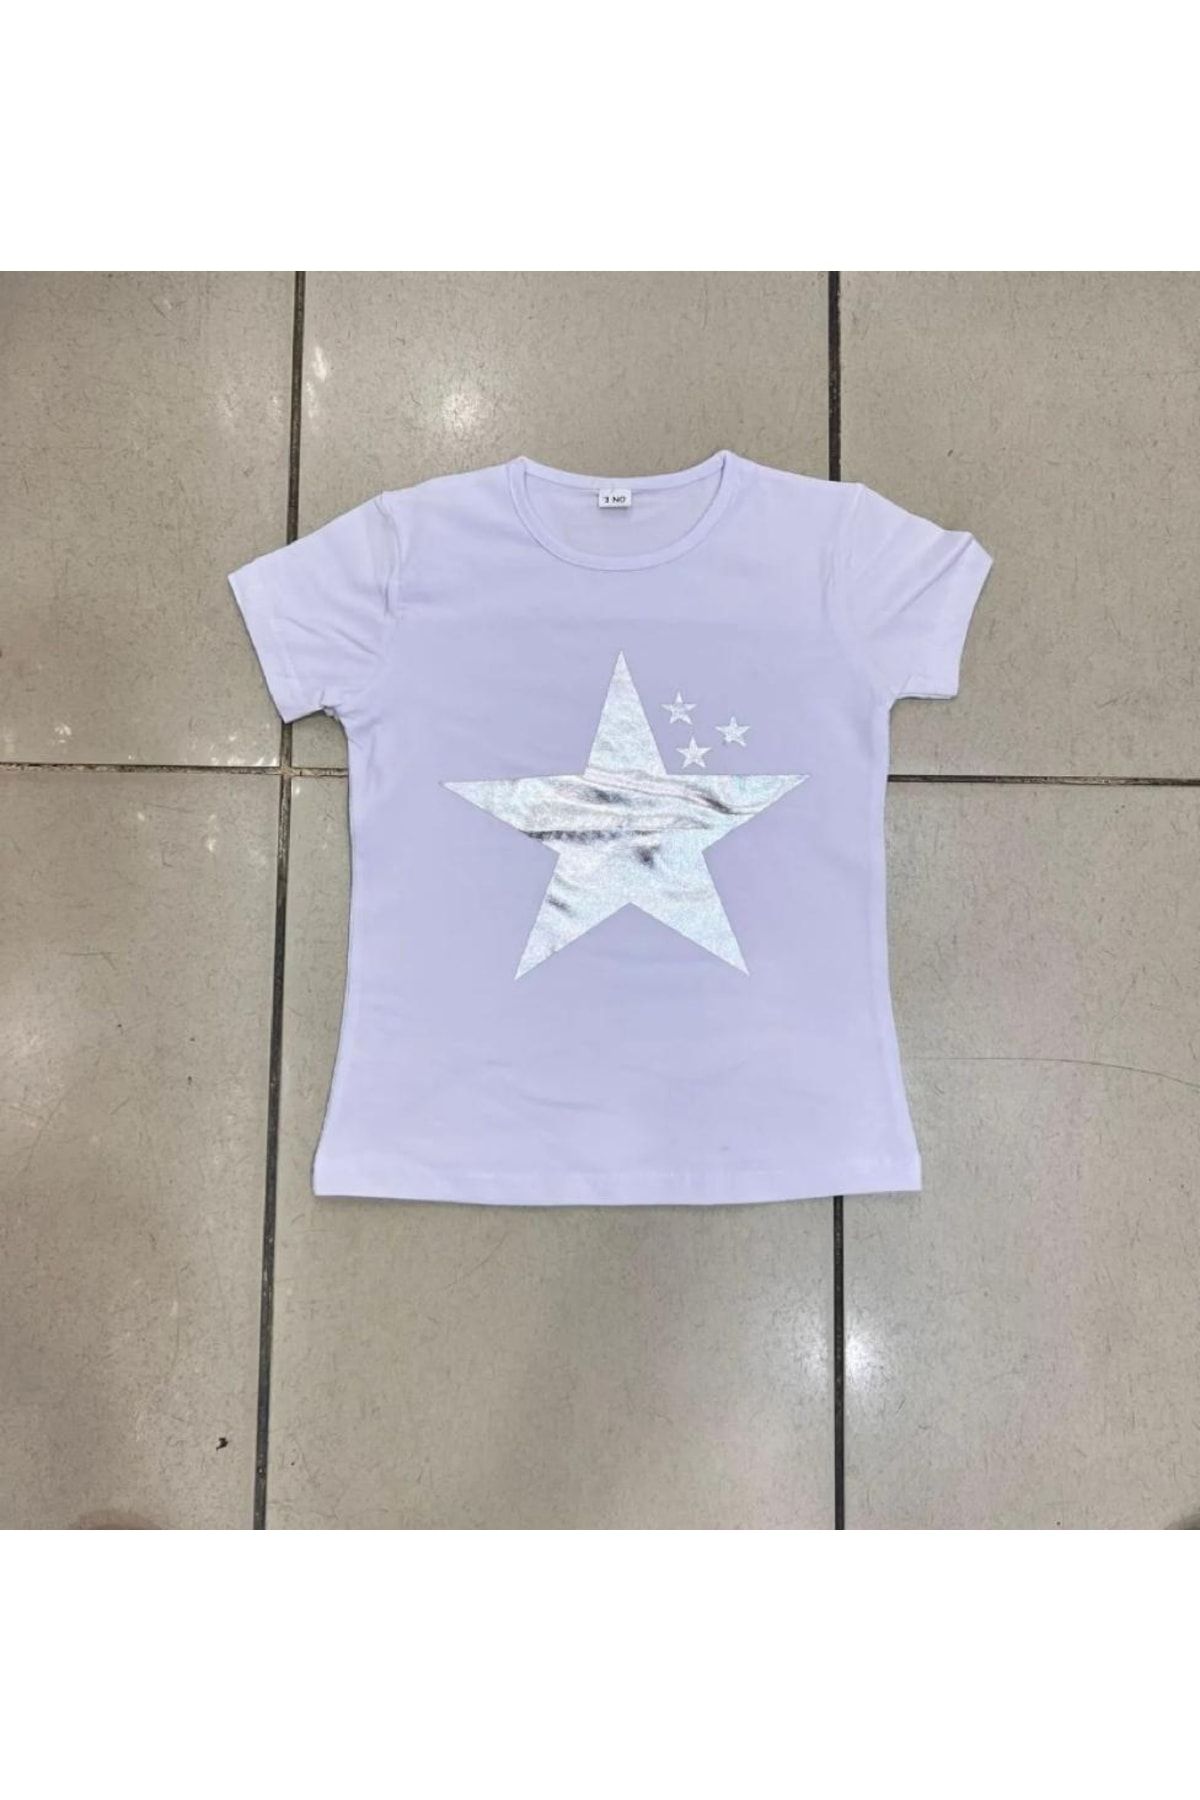 Yakalaa Kız Çocuk Gösteri Kıyafeti Tshirt Motifli